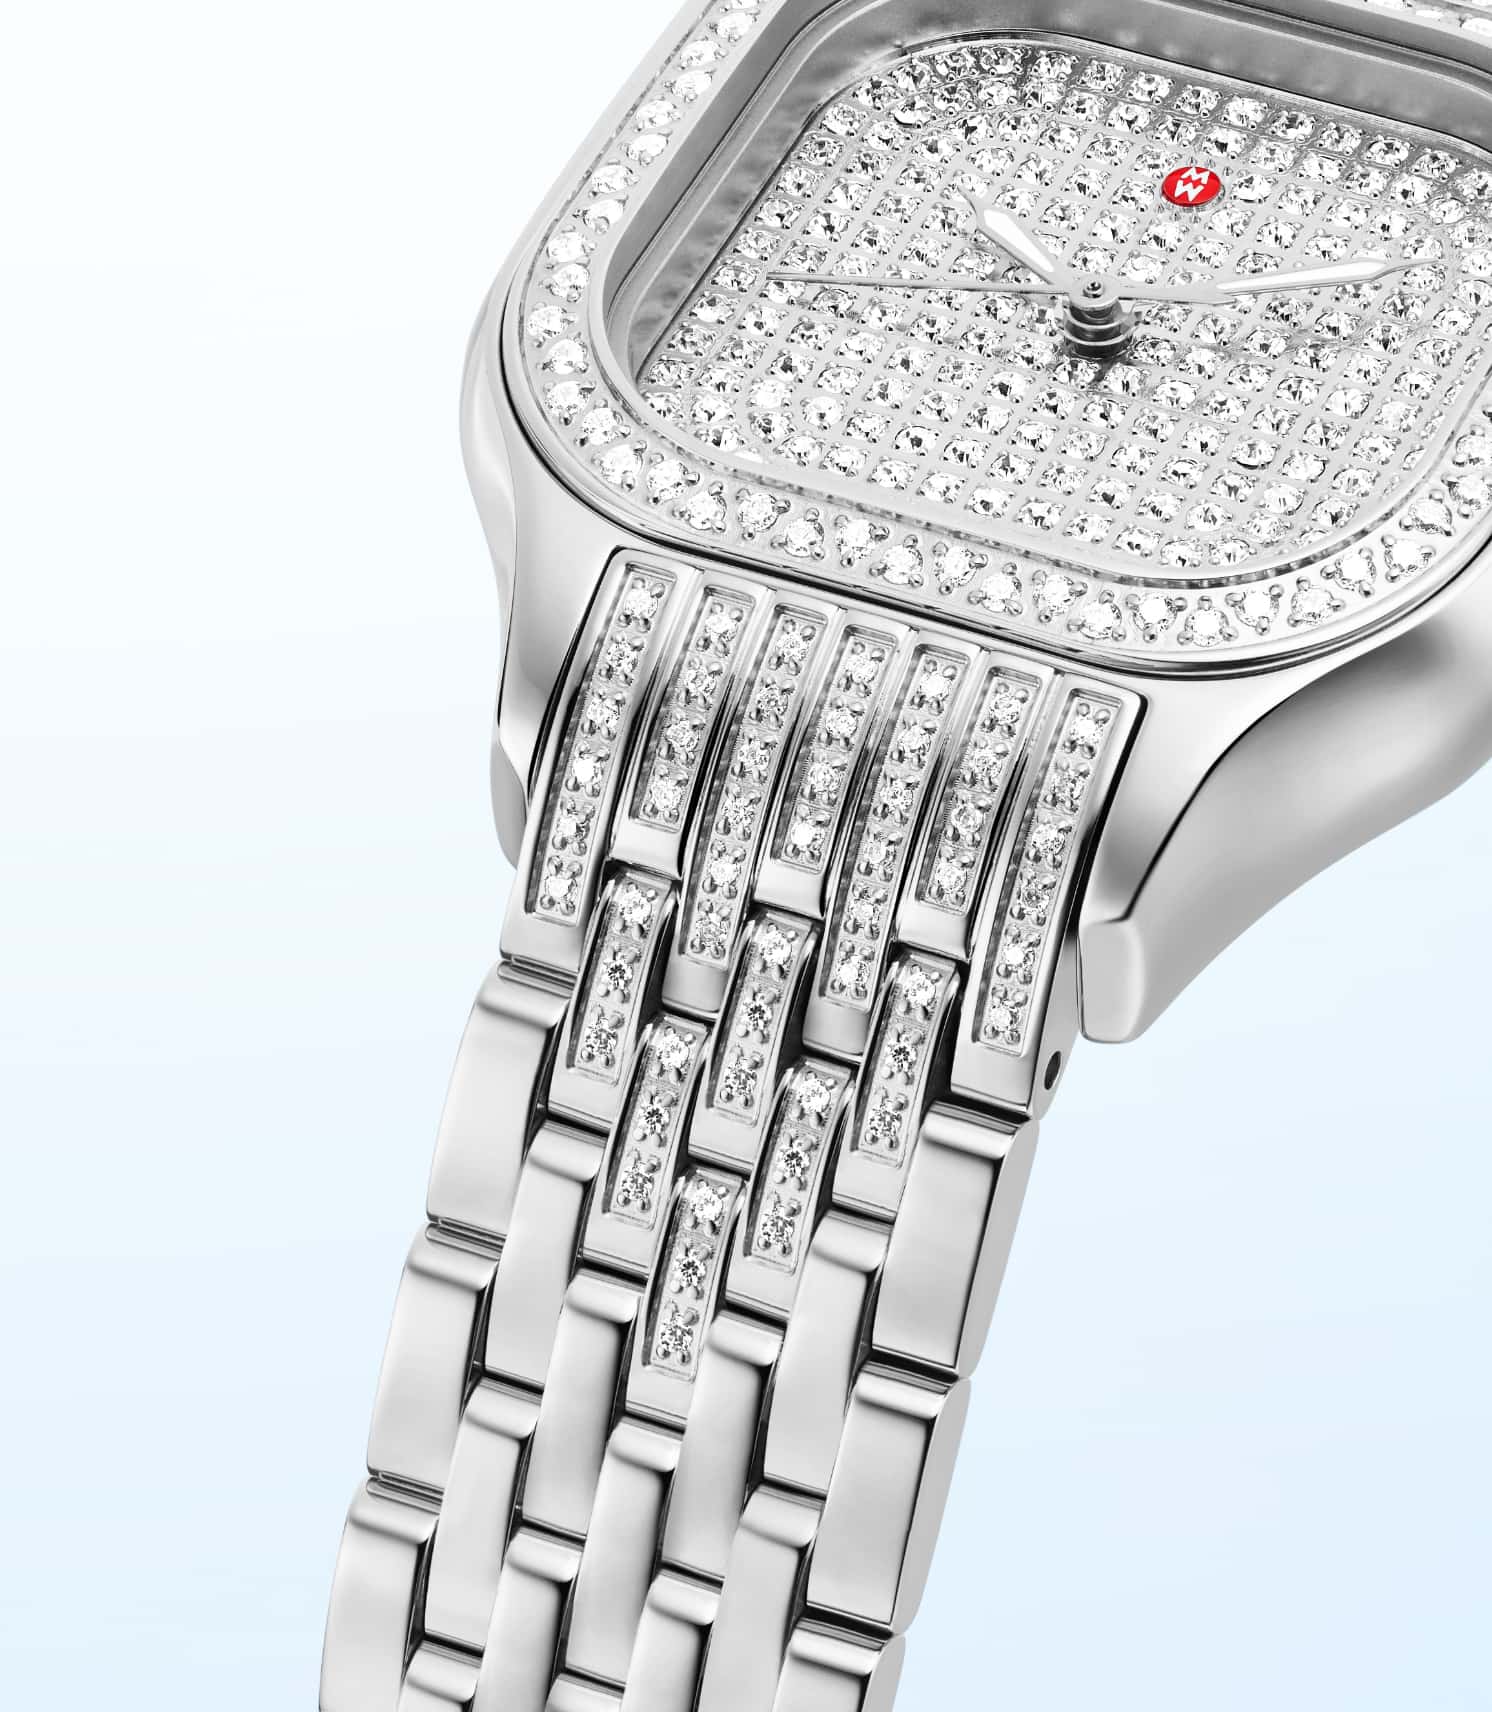 Limited-edition Meggie Stainless Diamond Pavé watch featuring 390 hand-set diamonds.